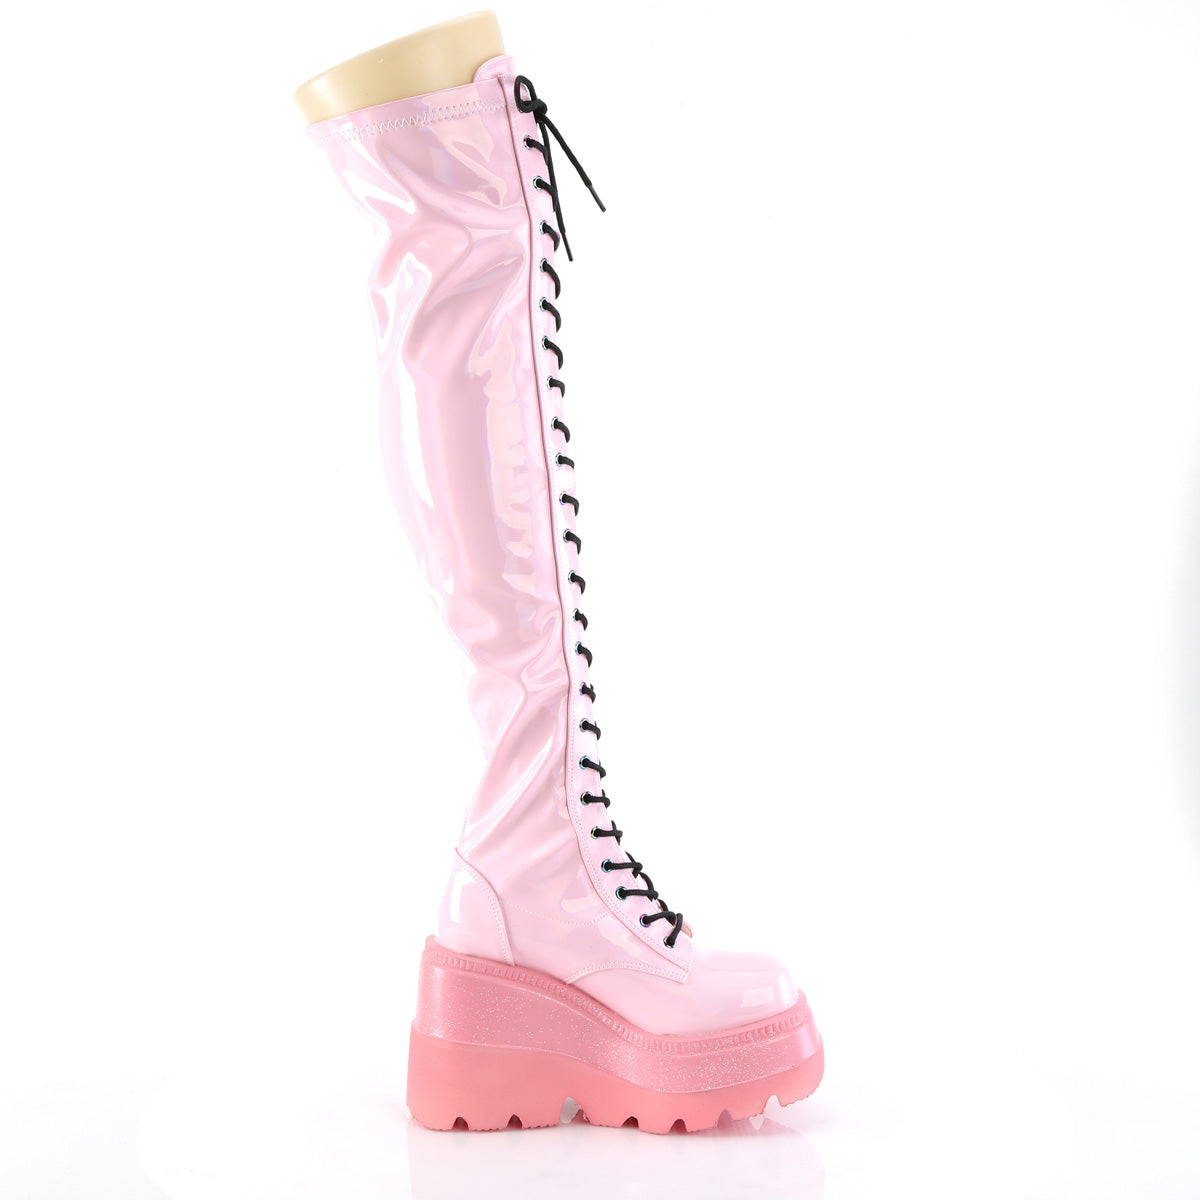 SHAKER-374-1 Demoniacult Alternative Footwear Women's Over-the-Knee Boots